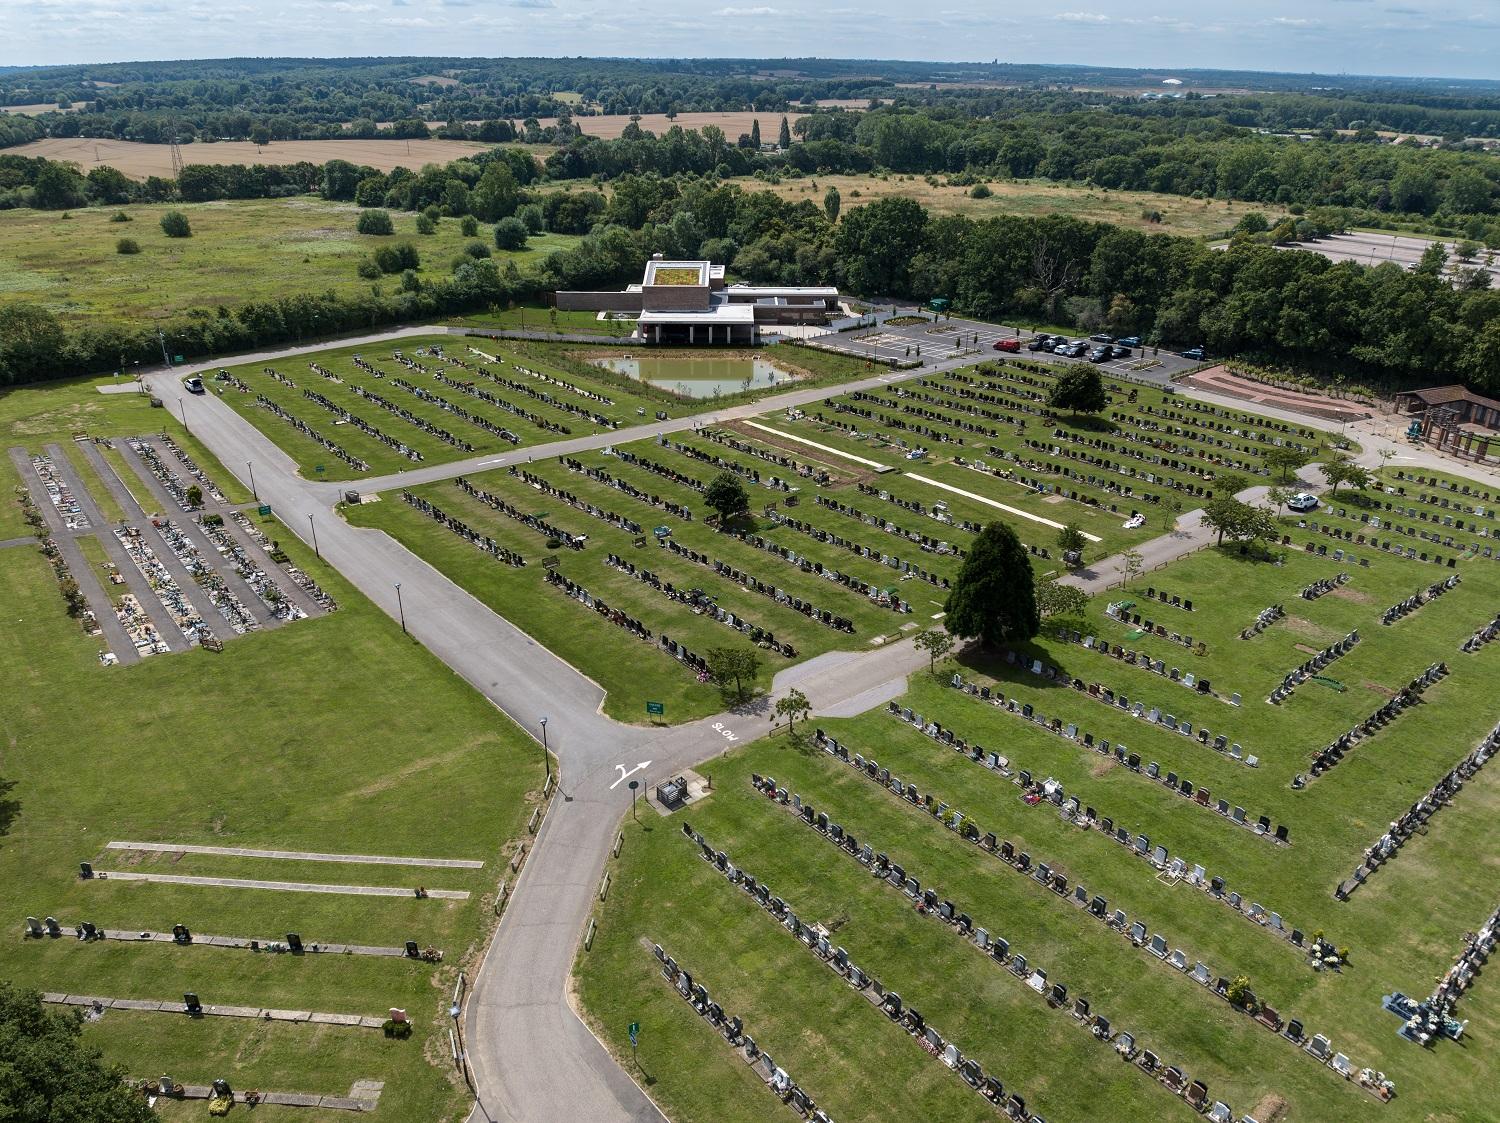 Image of the crematorium and surrounding fields